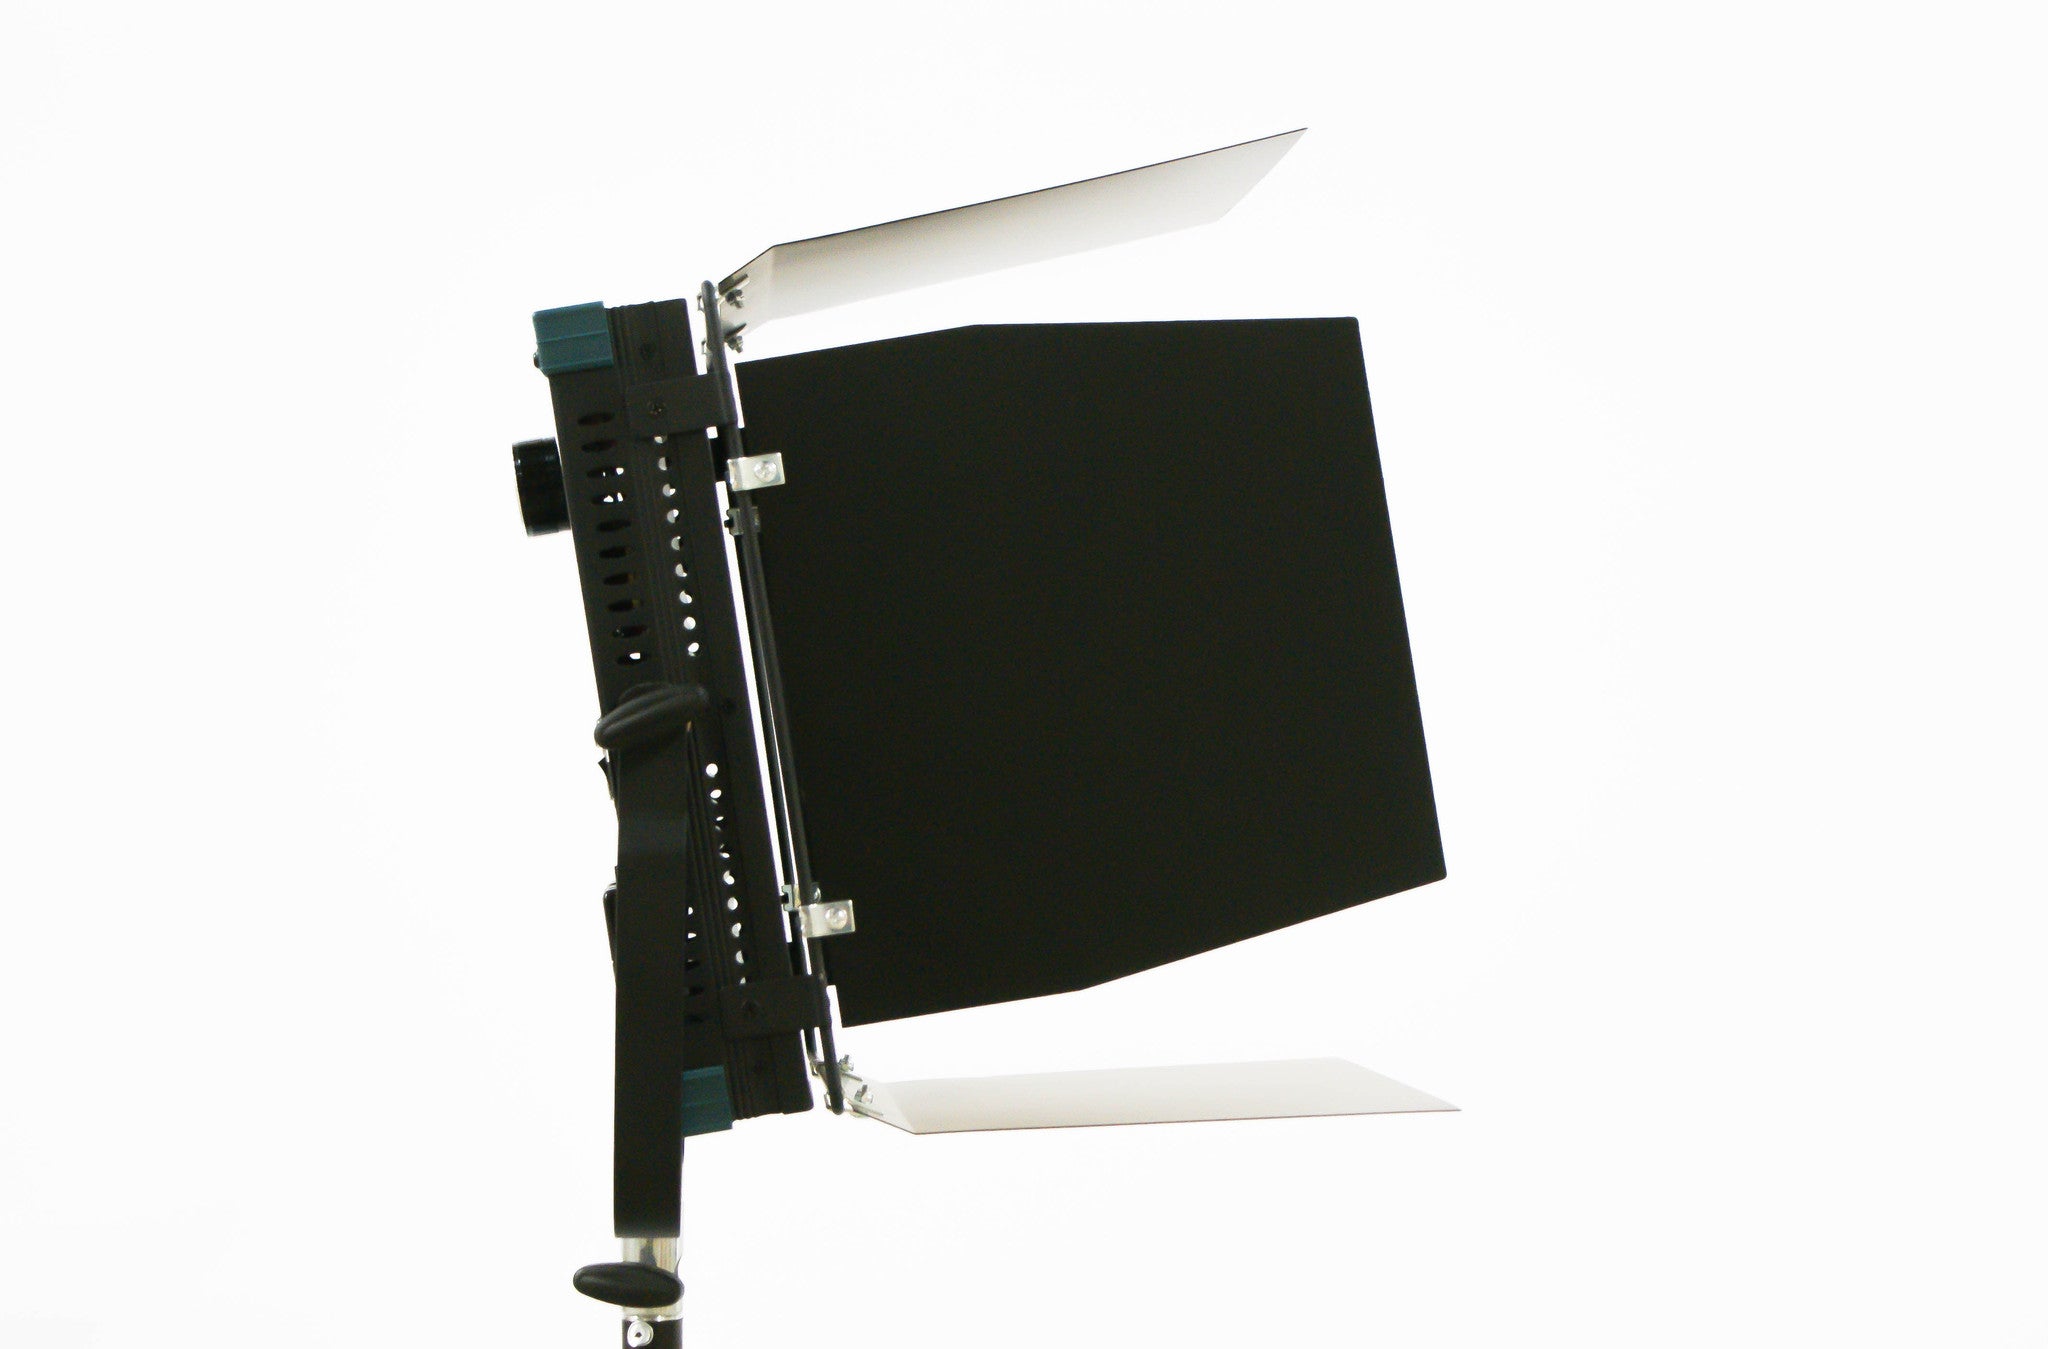 Intellytech Socanland Nova CD 5600k With DMX - Digital, Bi-Color, 1x1 LED Light Panel Metal Frame